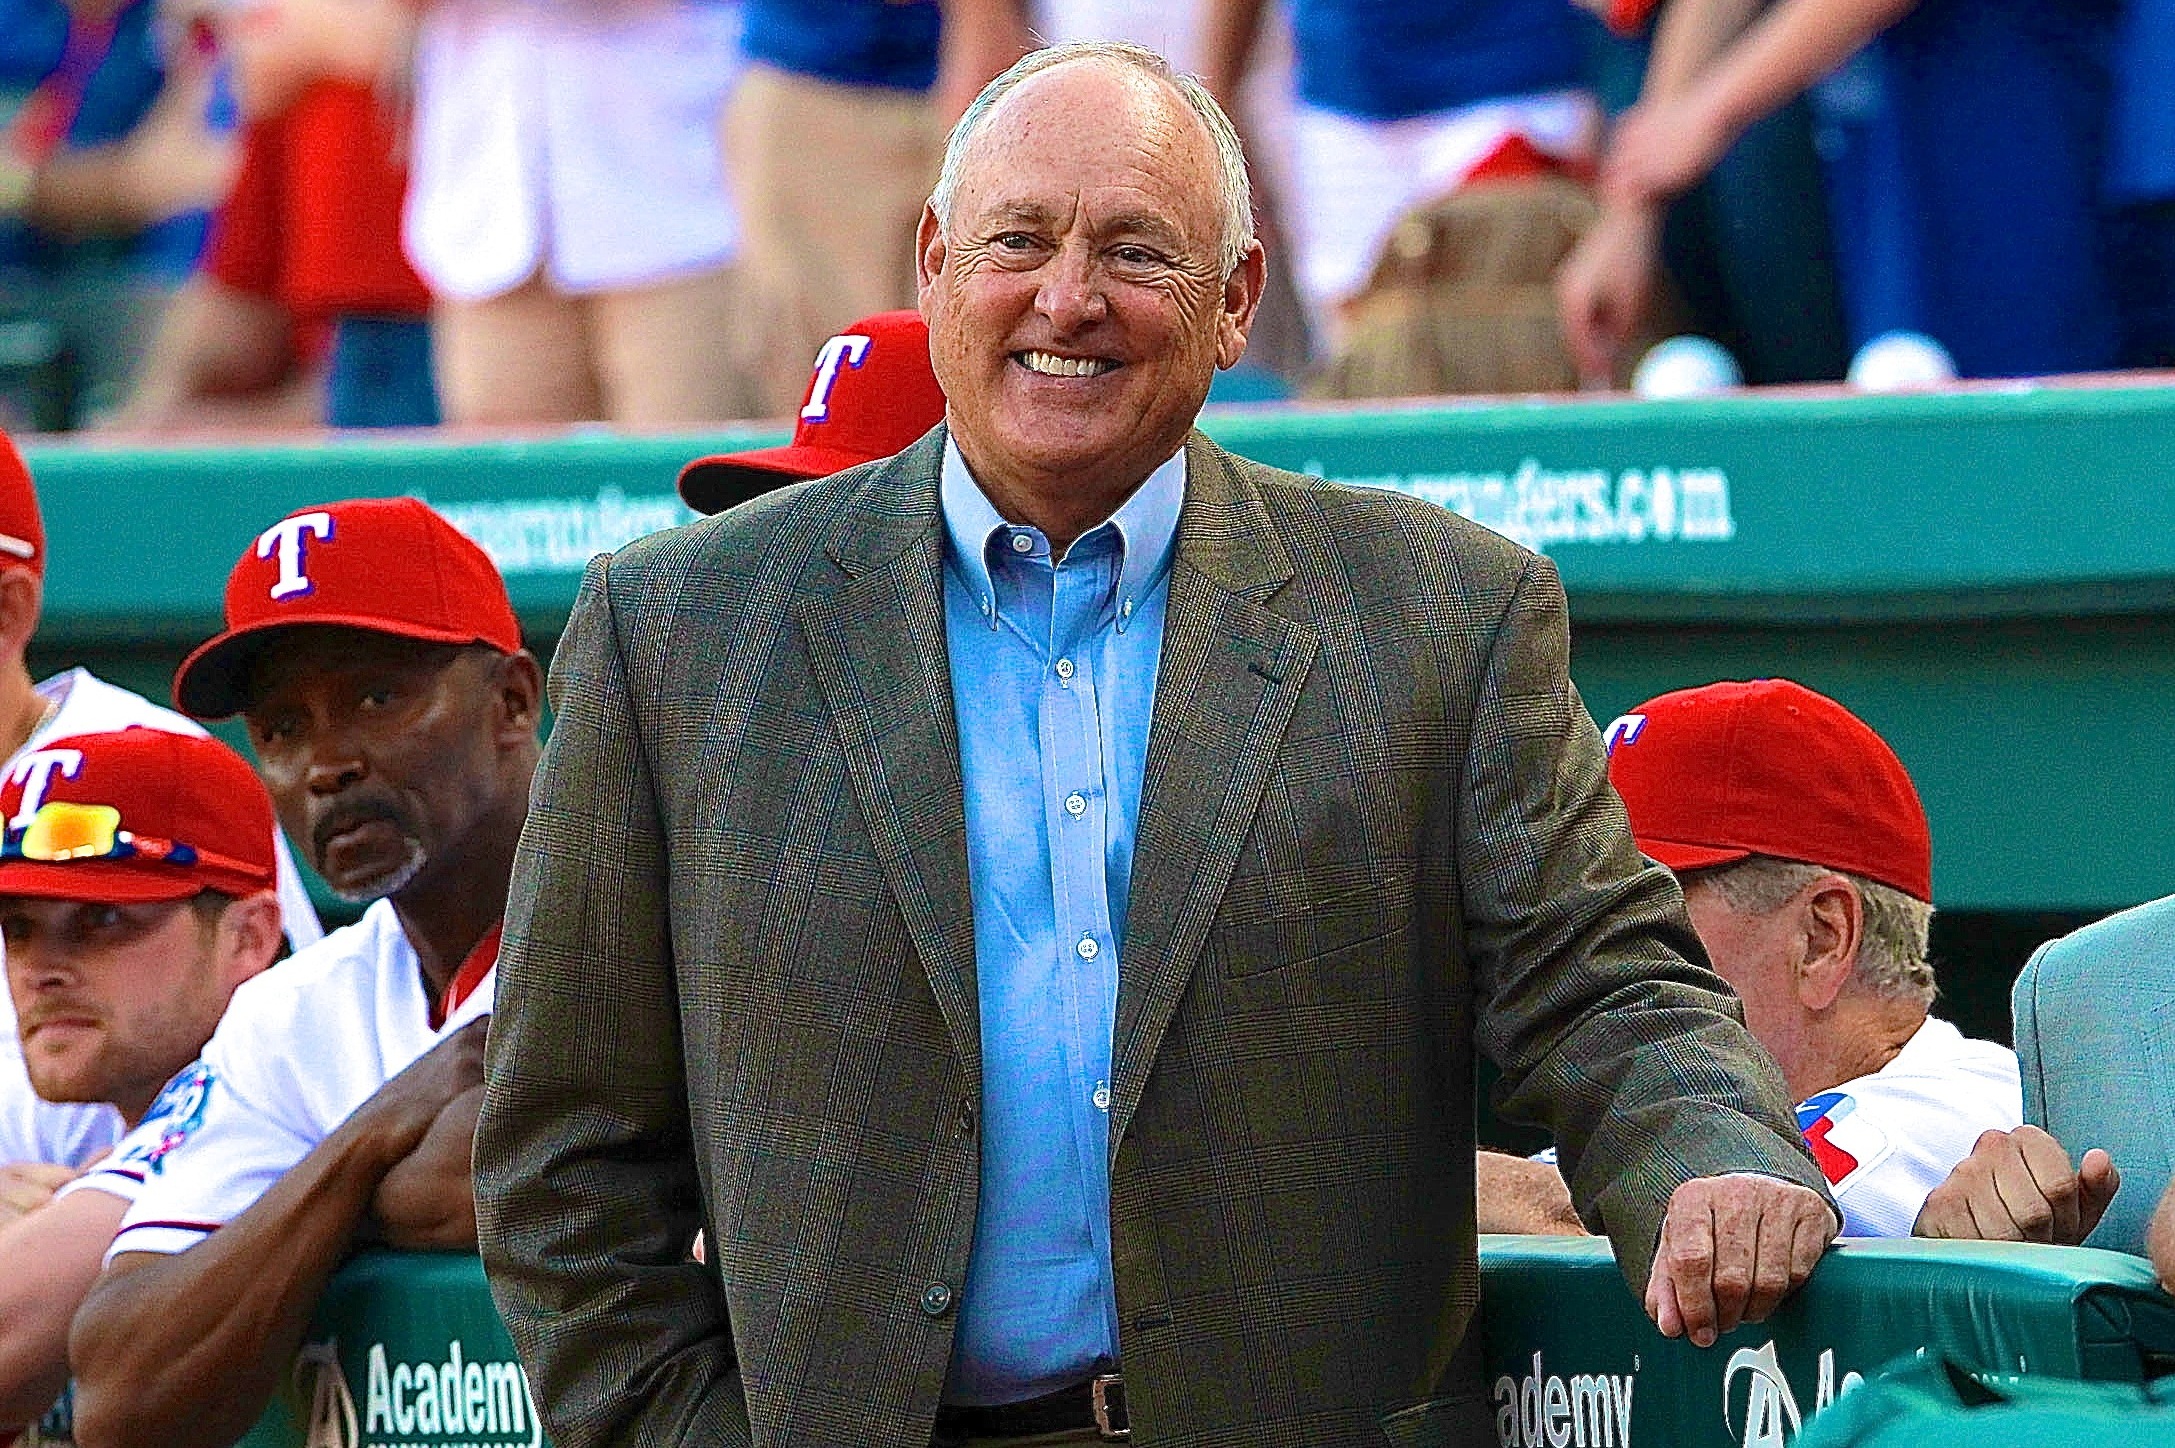 MLB Legend Nolan Ryan to Resign as Texas Rangers CEO